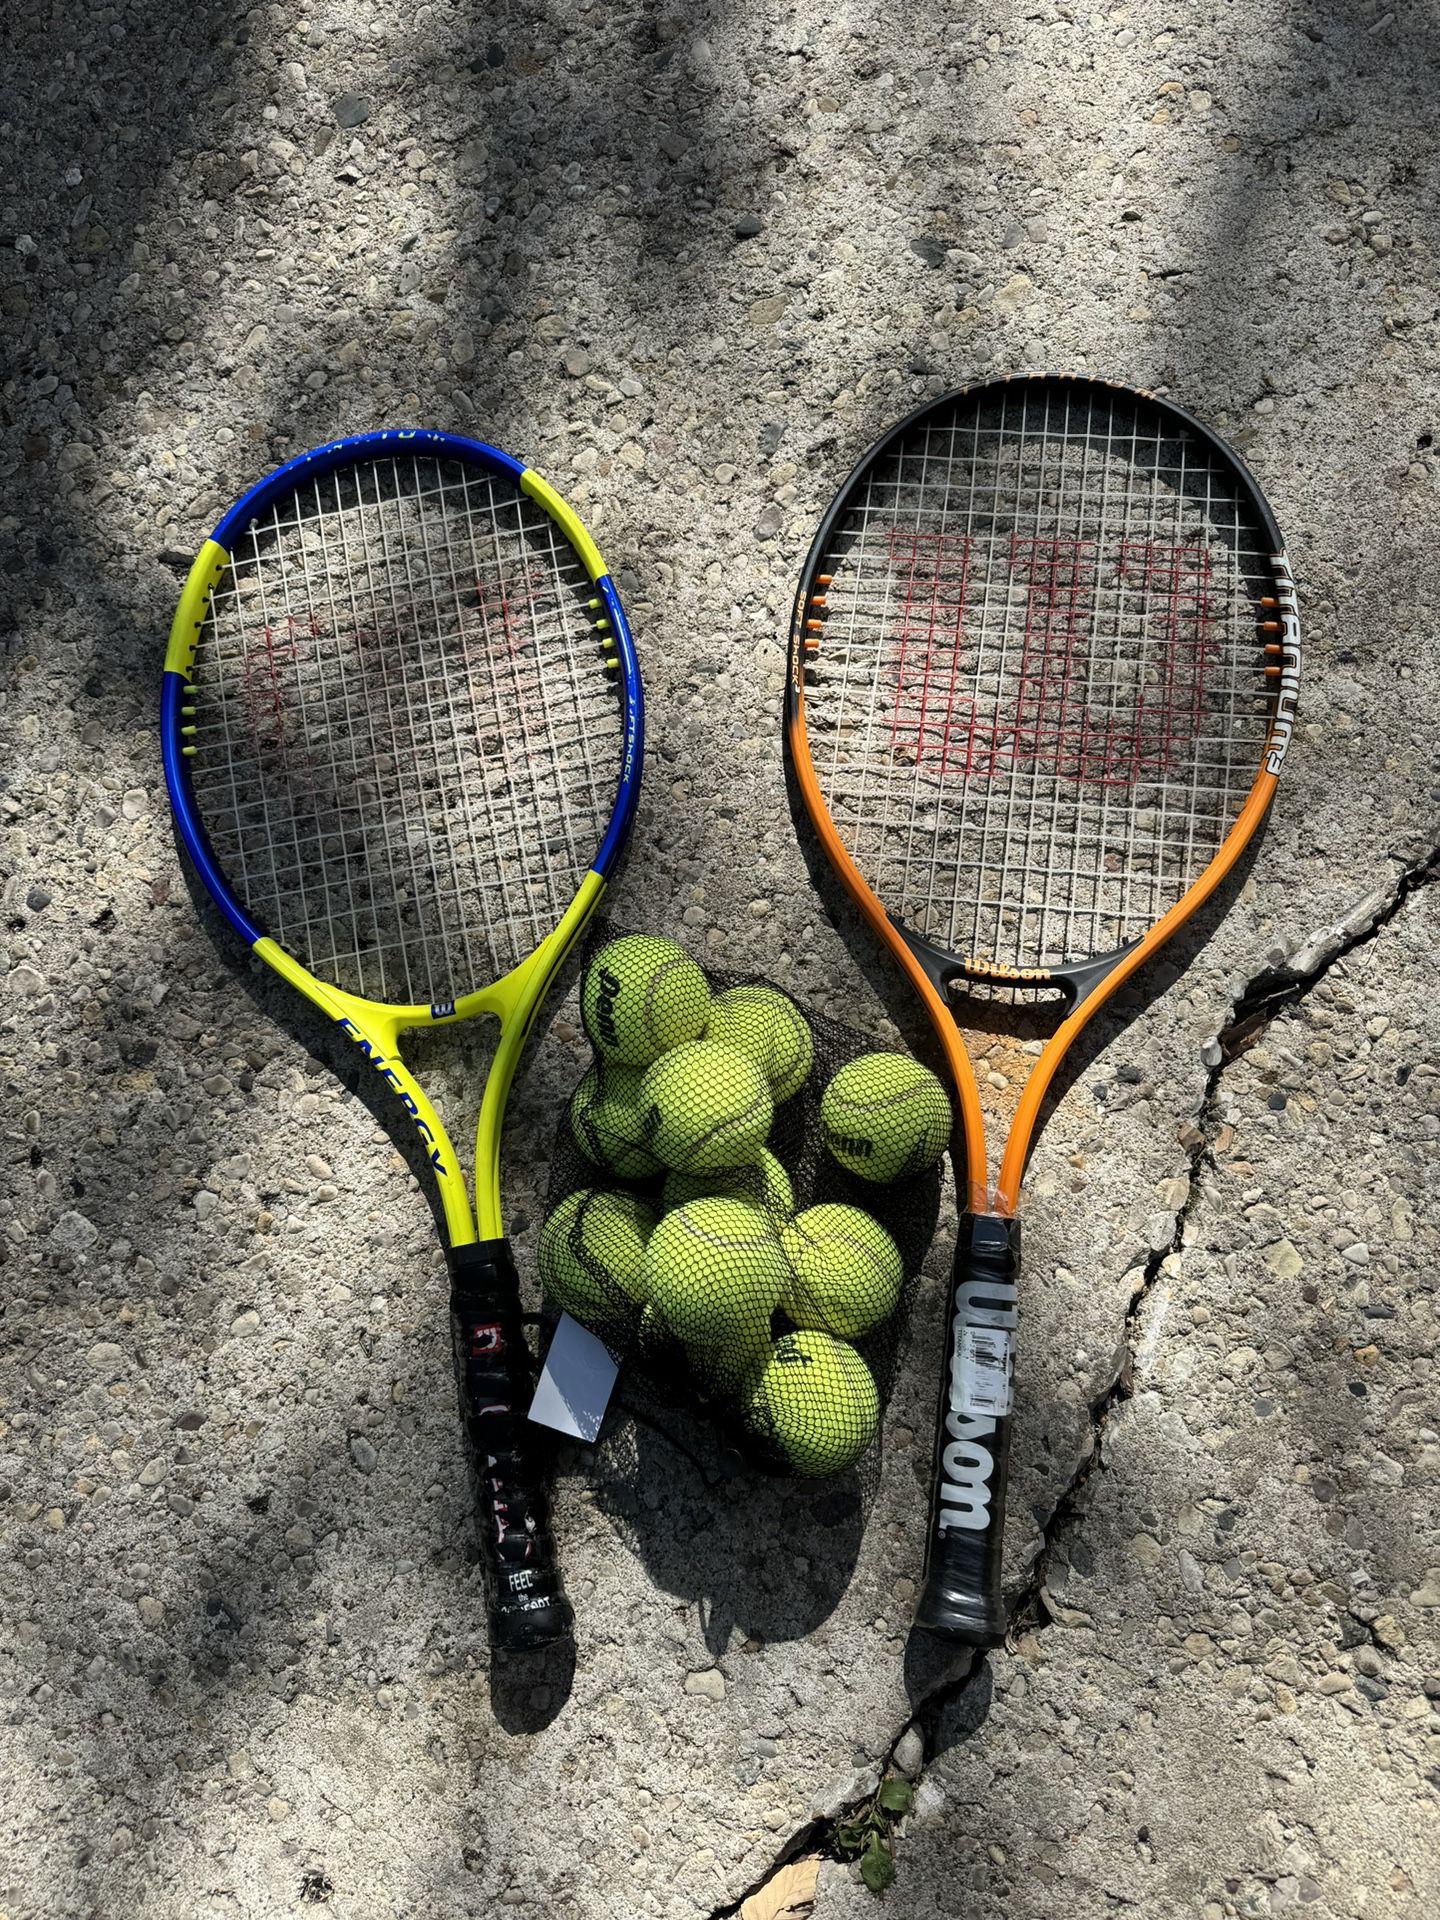 Tennis Racket with balls